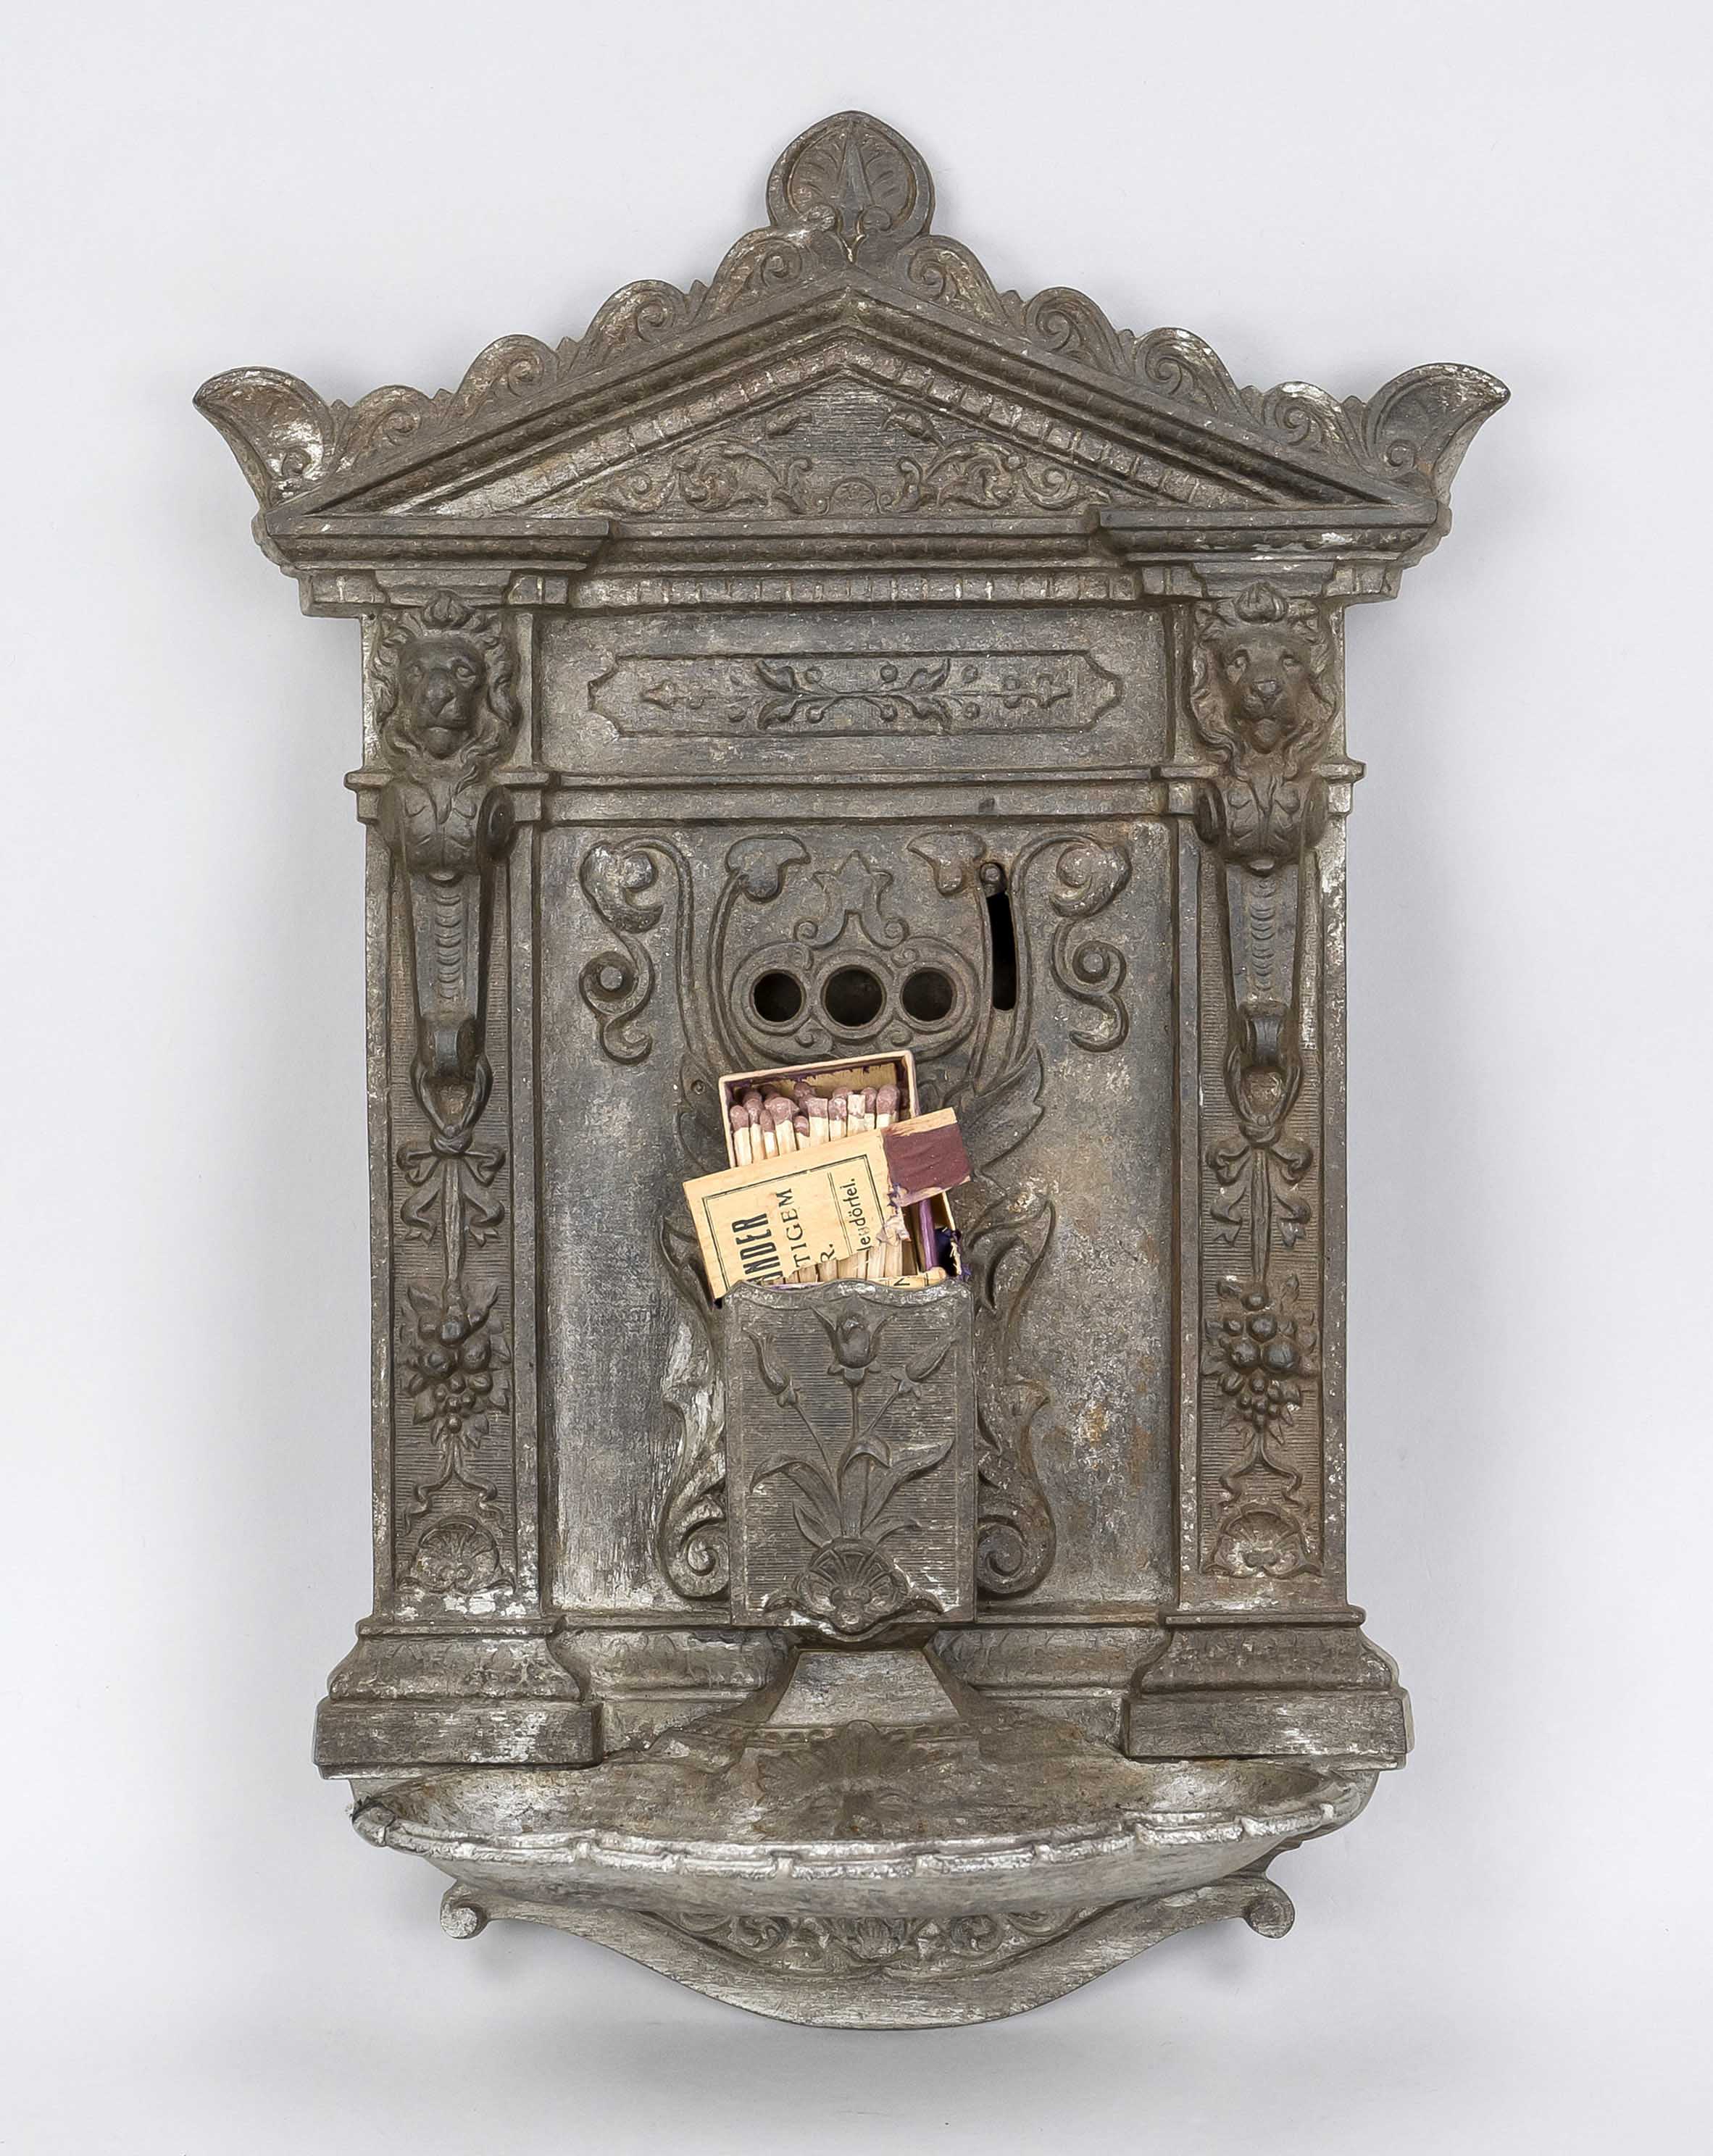 Wall matchbox holder, 2nd half 19th century, cast iron. Architectural construction in Renaissance